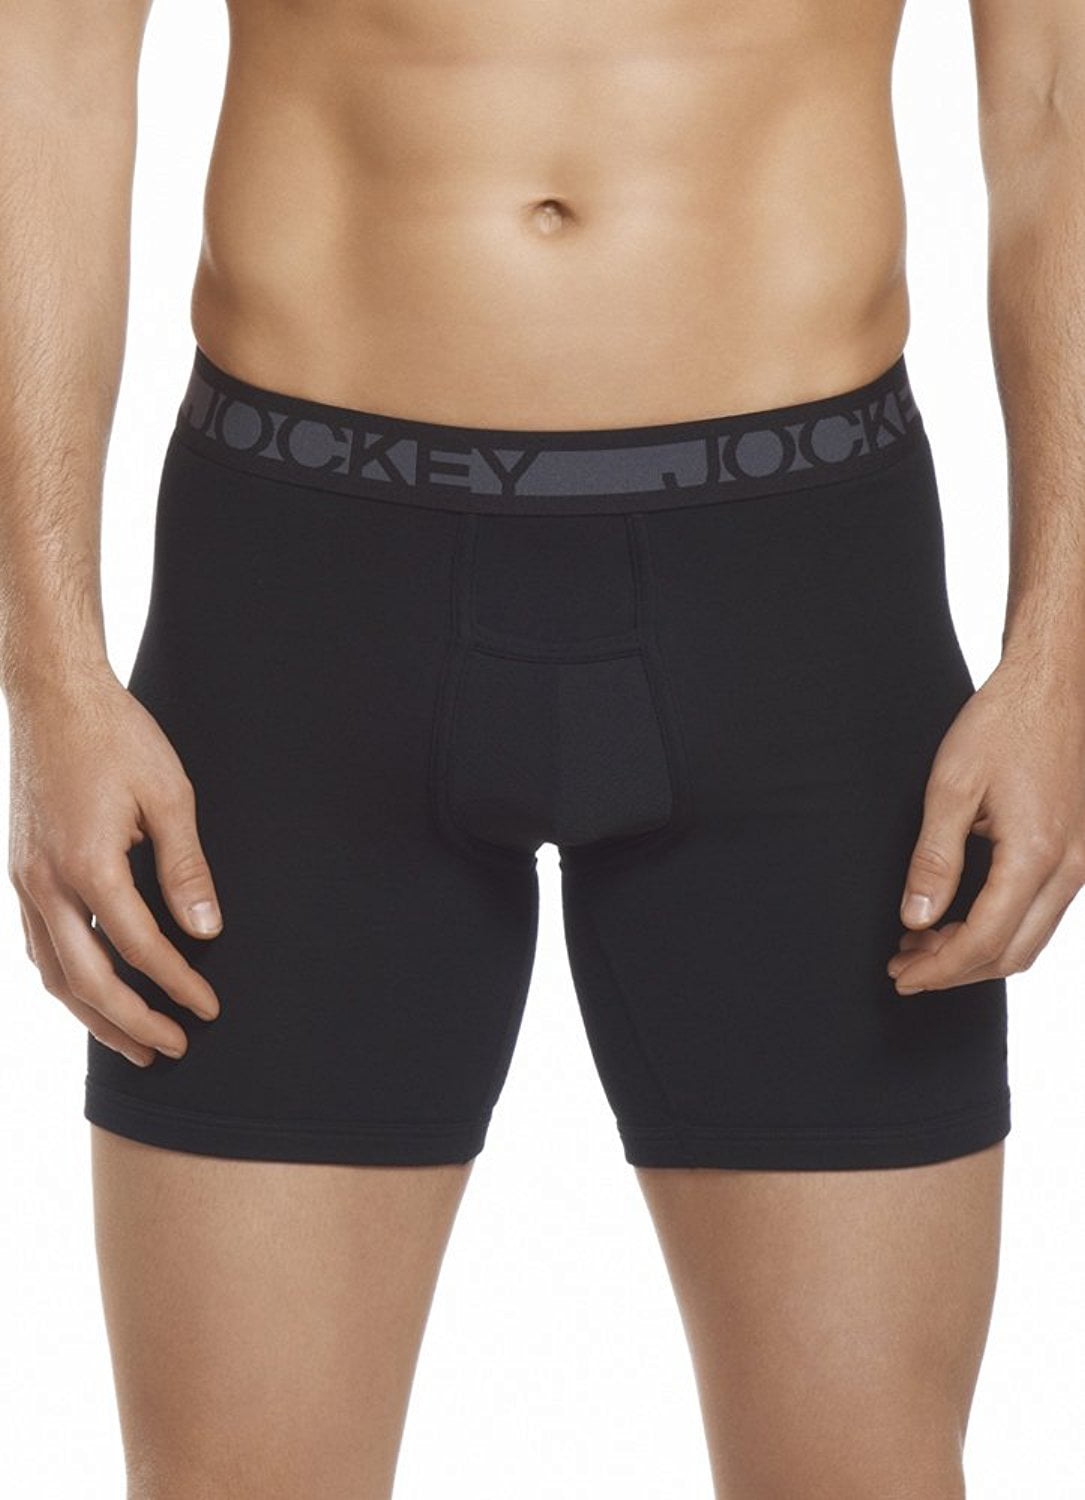 BETTKEN Mens Boxer Briefs Funny Emotion Smile Face Short Underwear Soft Stretch Underpants for Men Boys S-XL